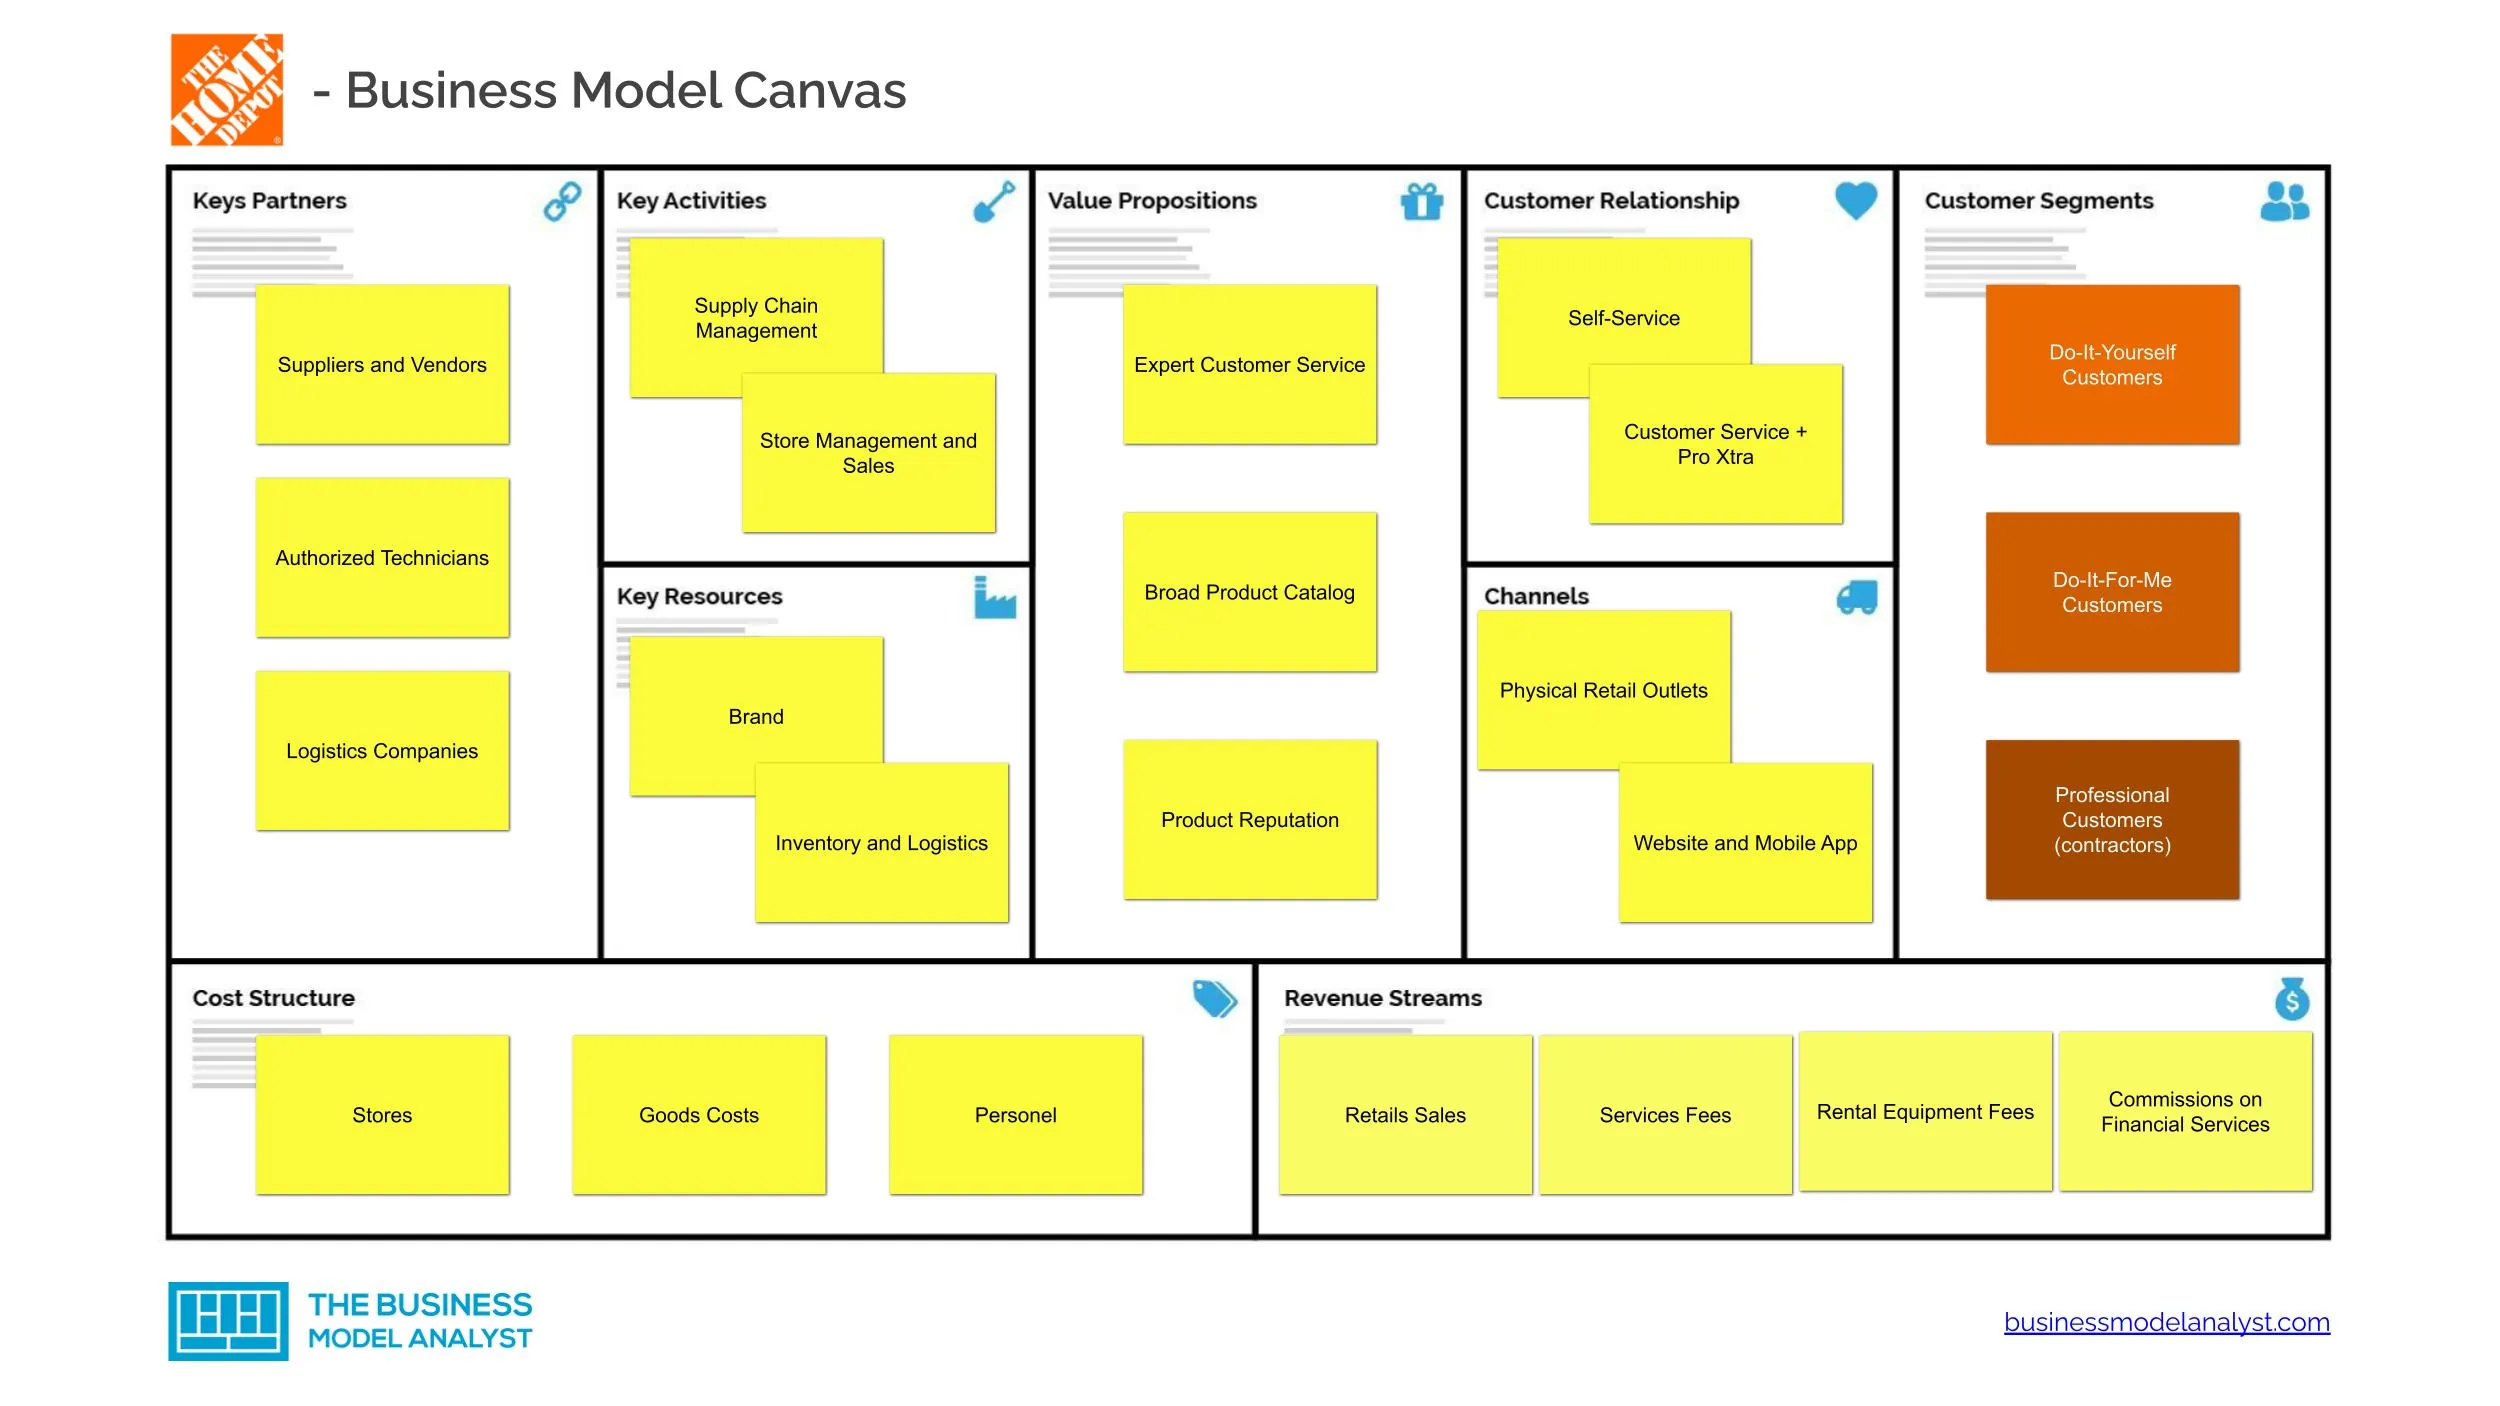 Home Depot Business Model Canvas - Home Depot Business Model